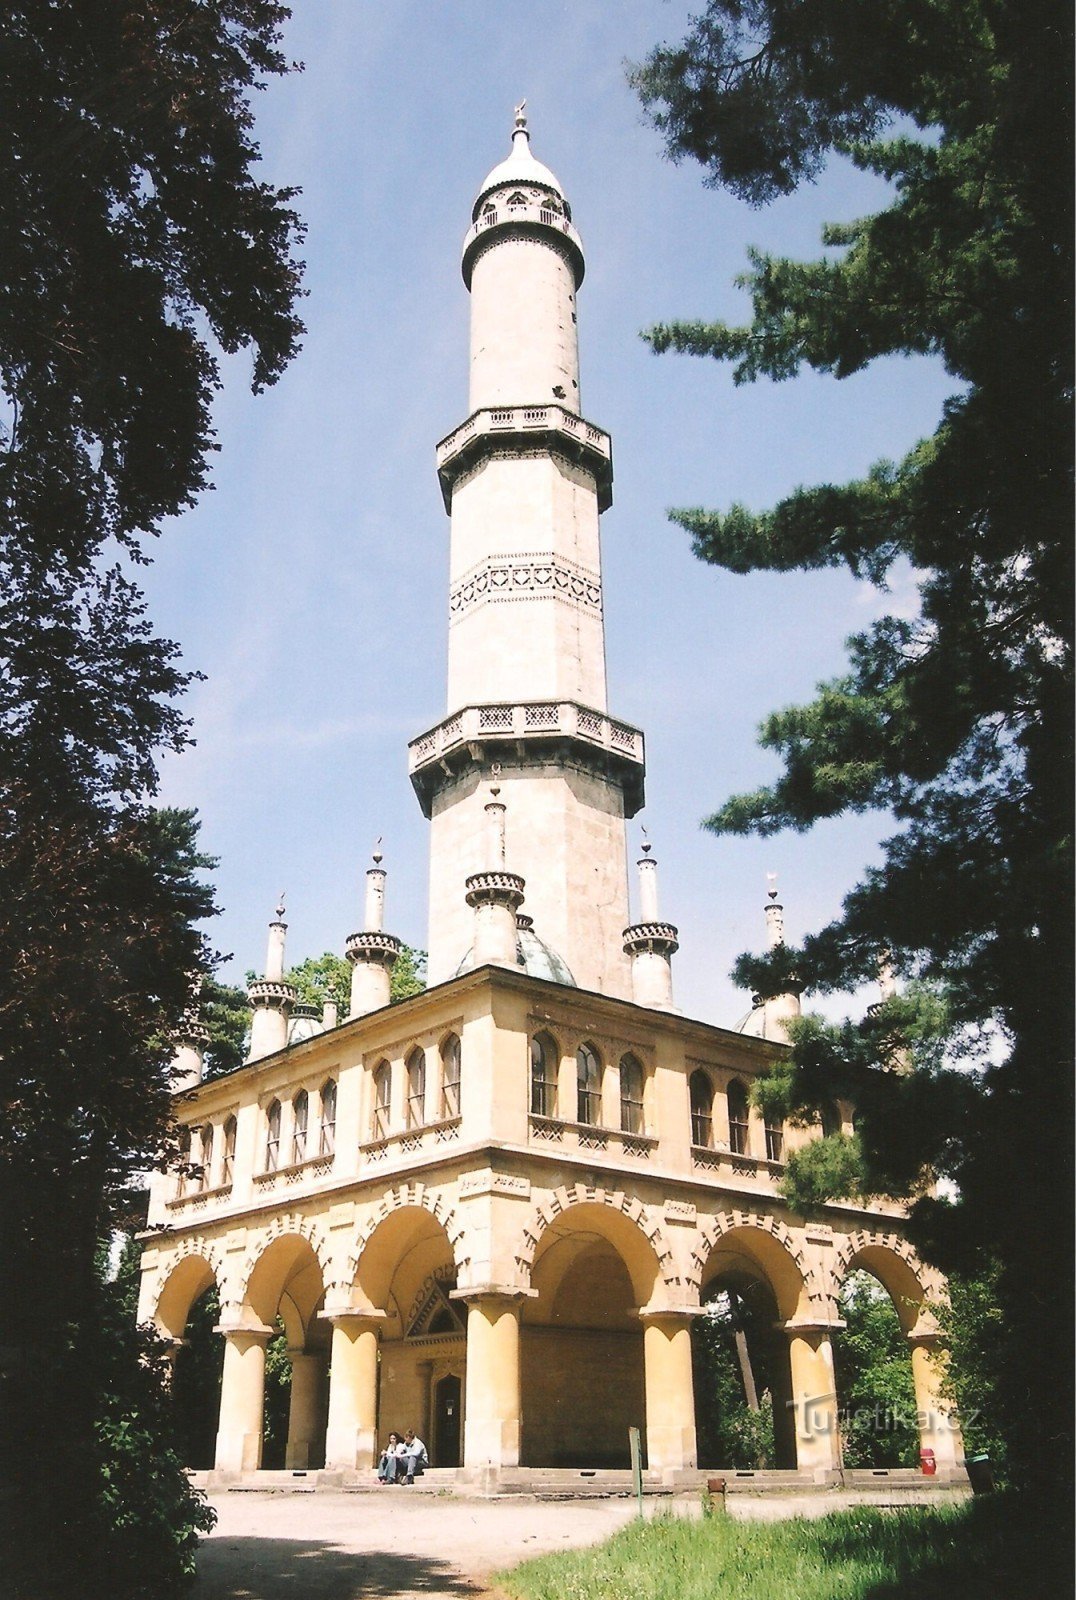 Minaret w Parku Lednickim